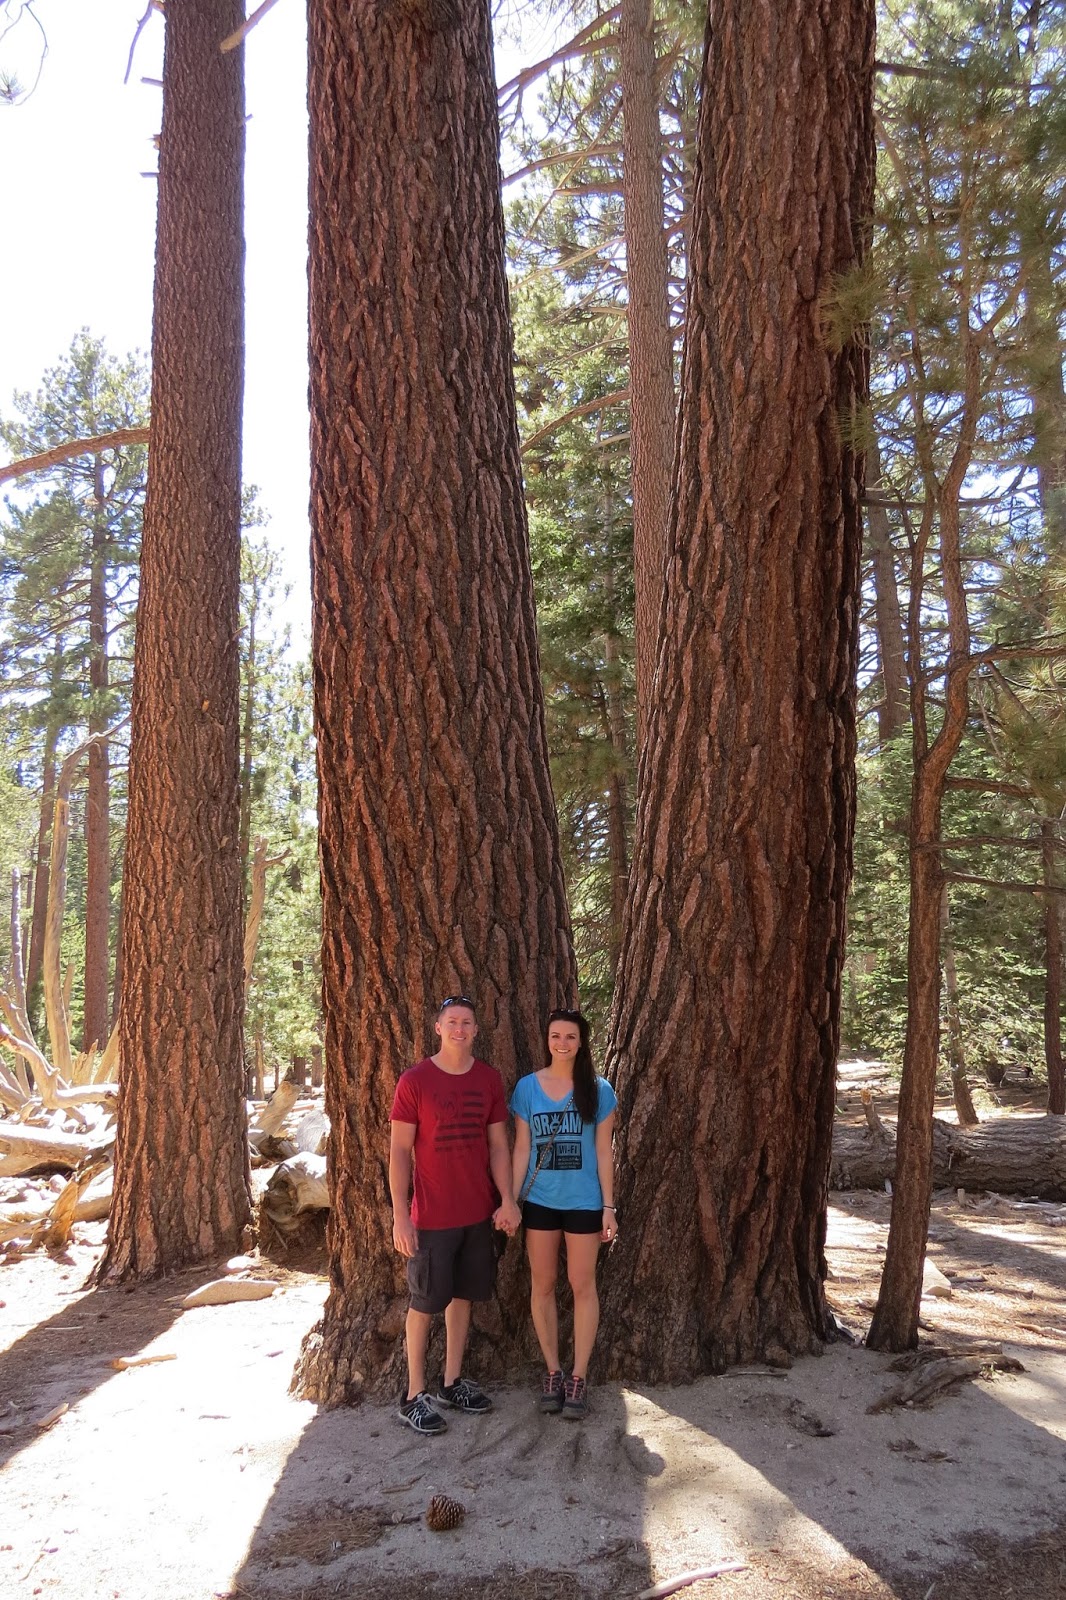 Mount San Jacinto State Park Lodgepole Pine